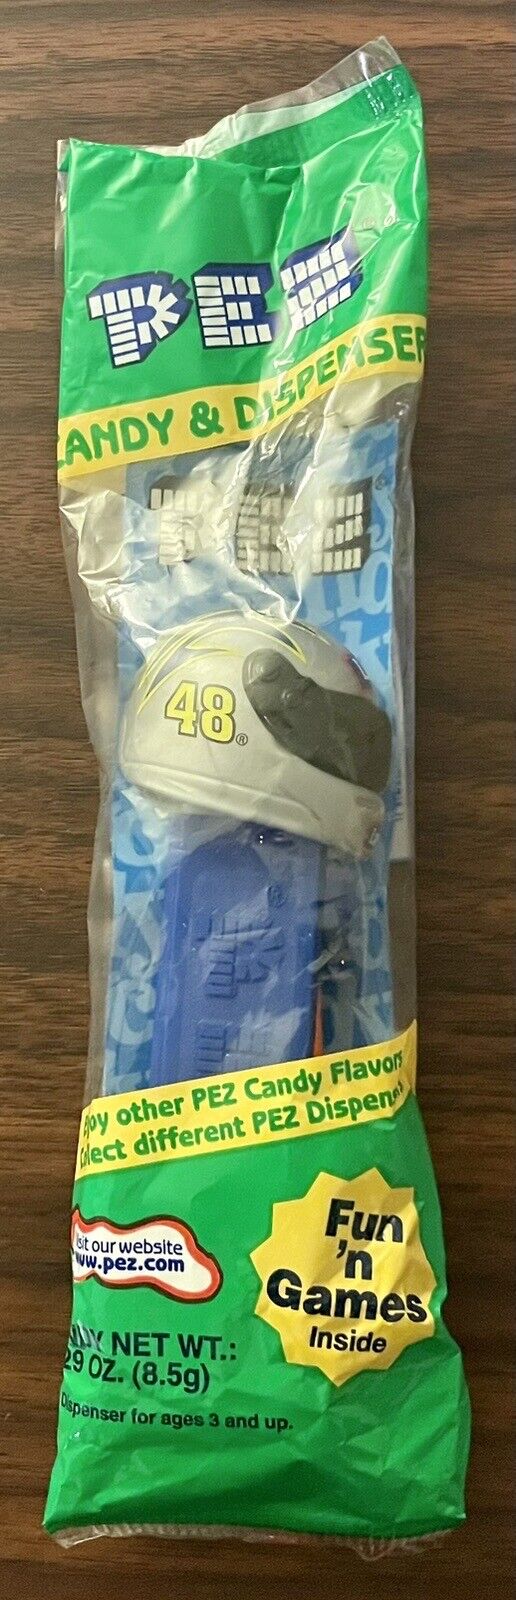 NASCAR 48 Lowe’s Pez Dispenser